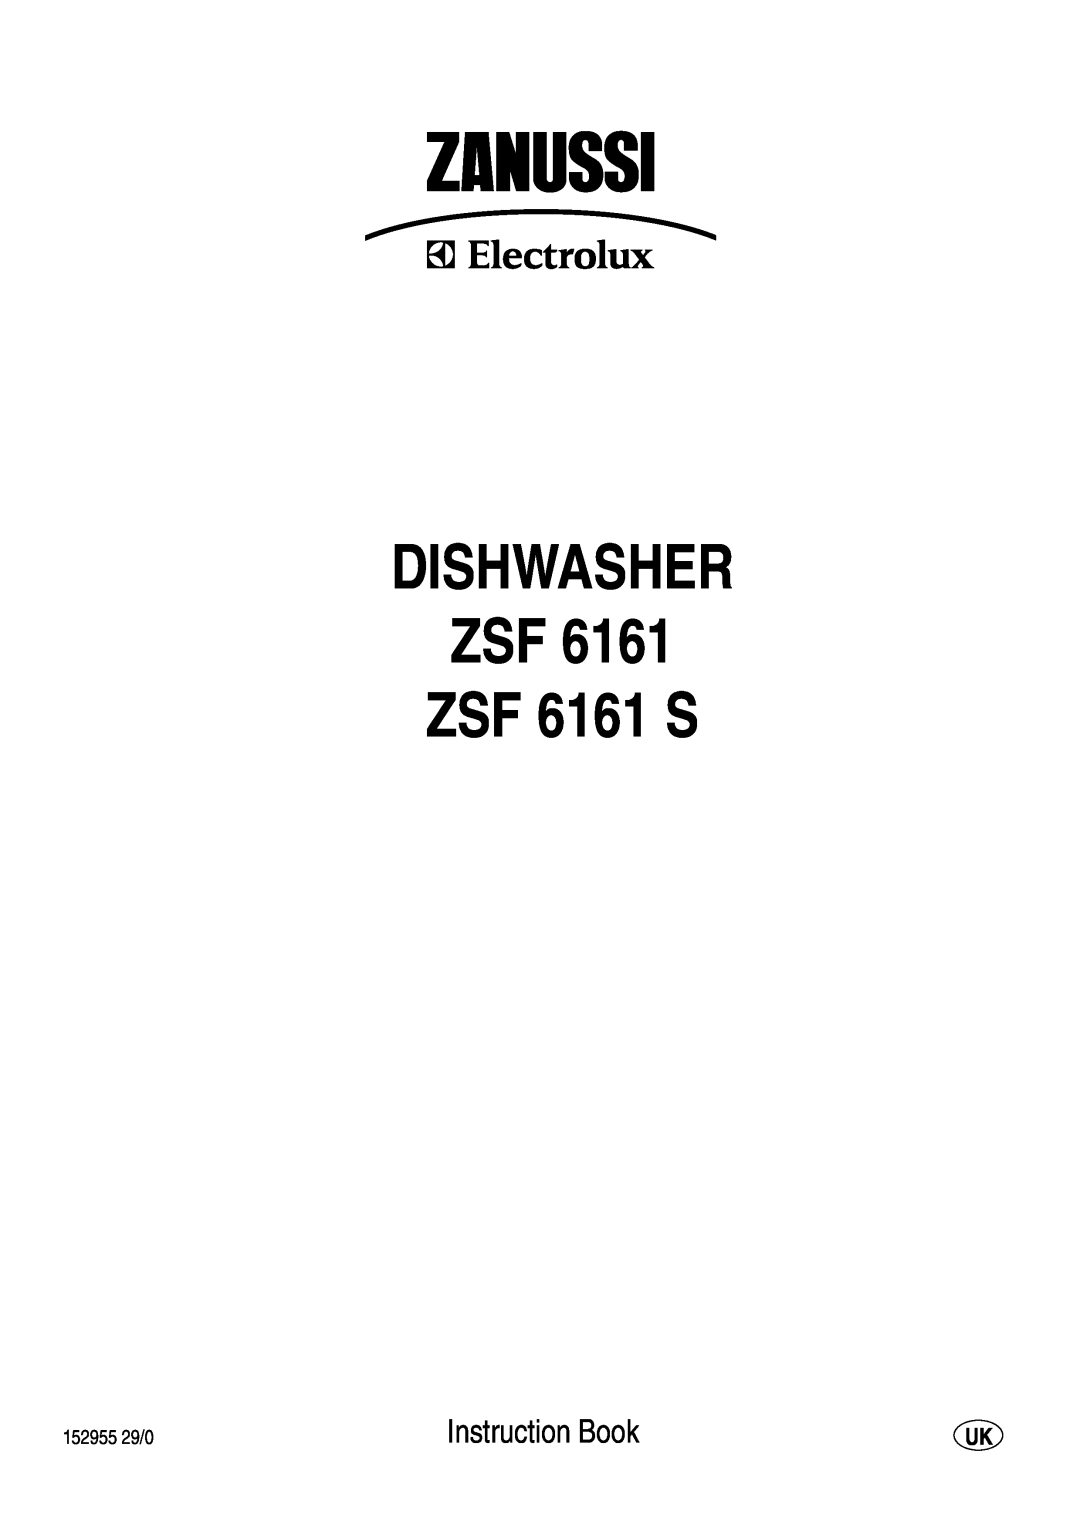 Zanussi manual DISHWASHER ZSF ZSF 6161 S, Instruction Book, 152955 29/0 